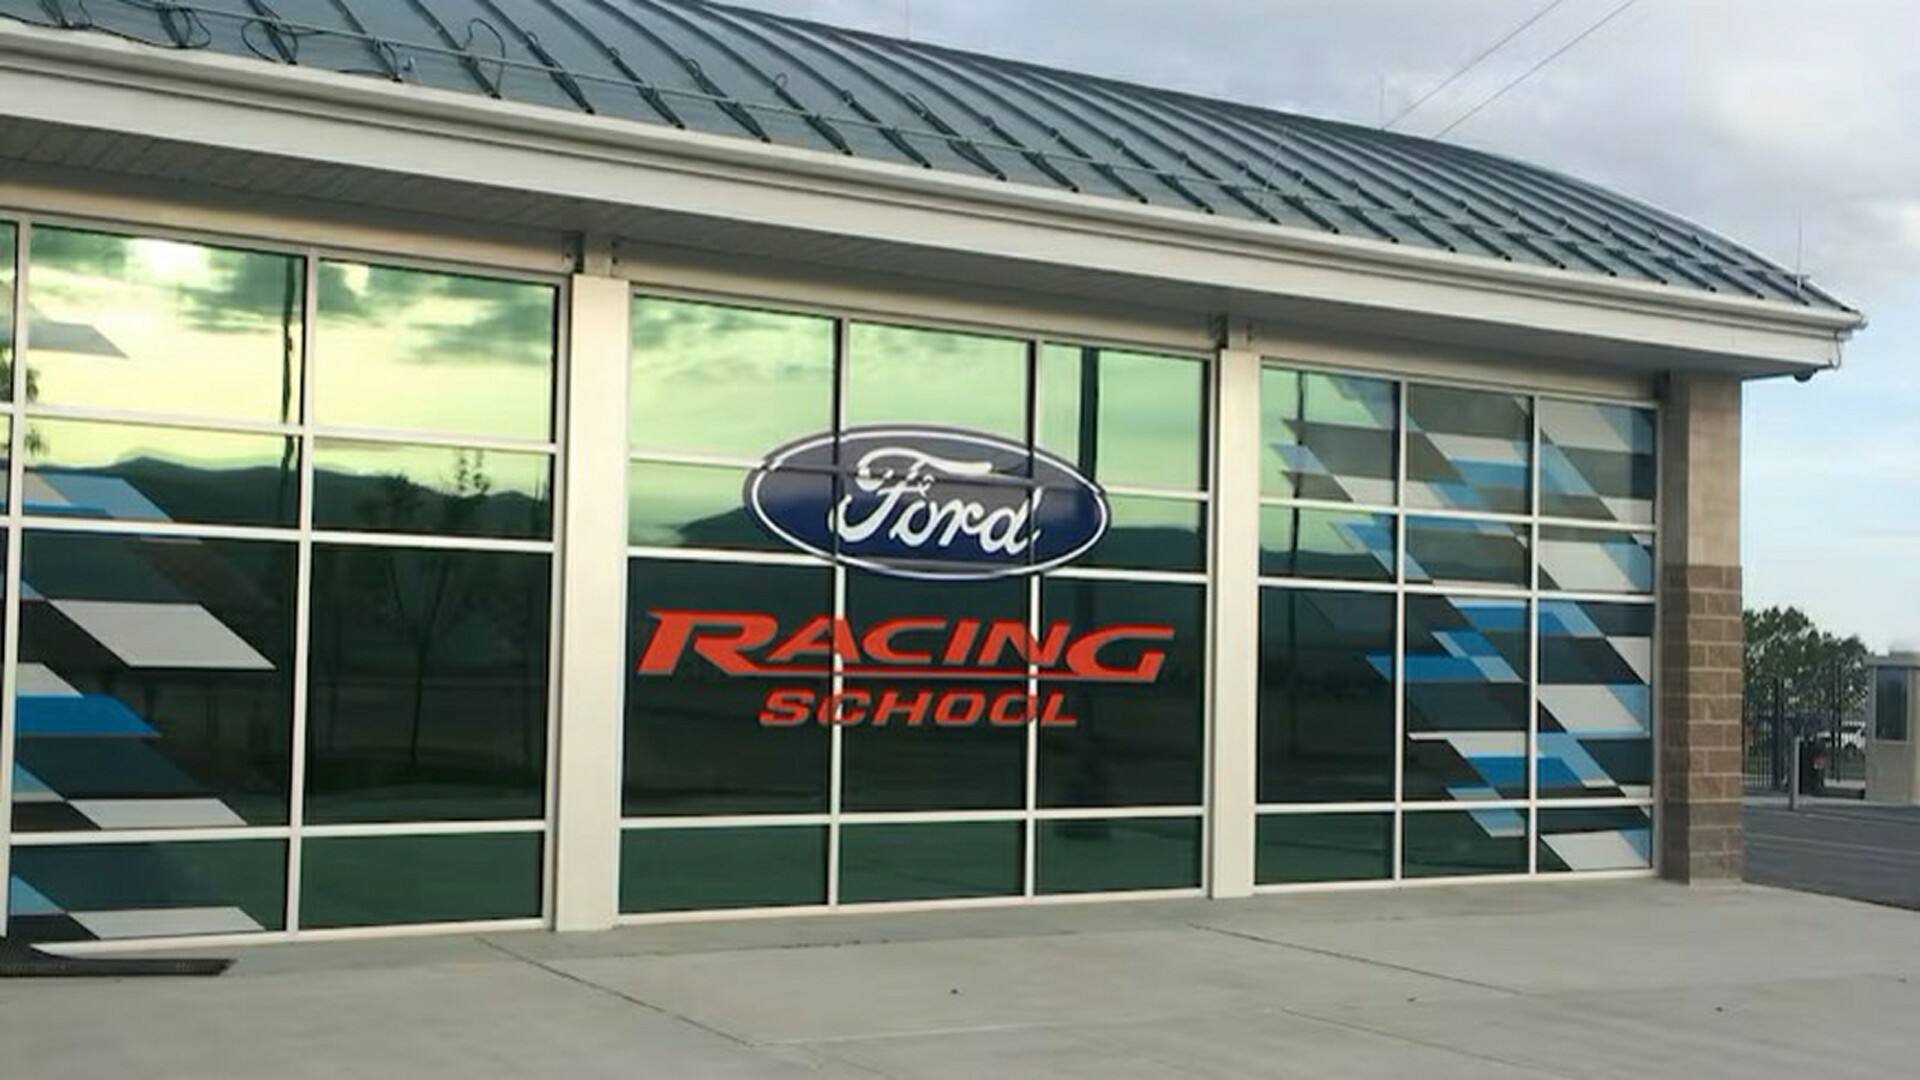 Ford Performance Racing School In Charlotte, North Carolina